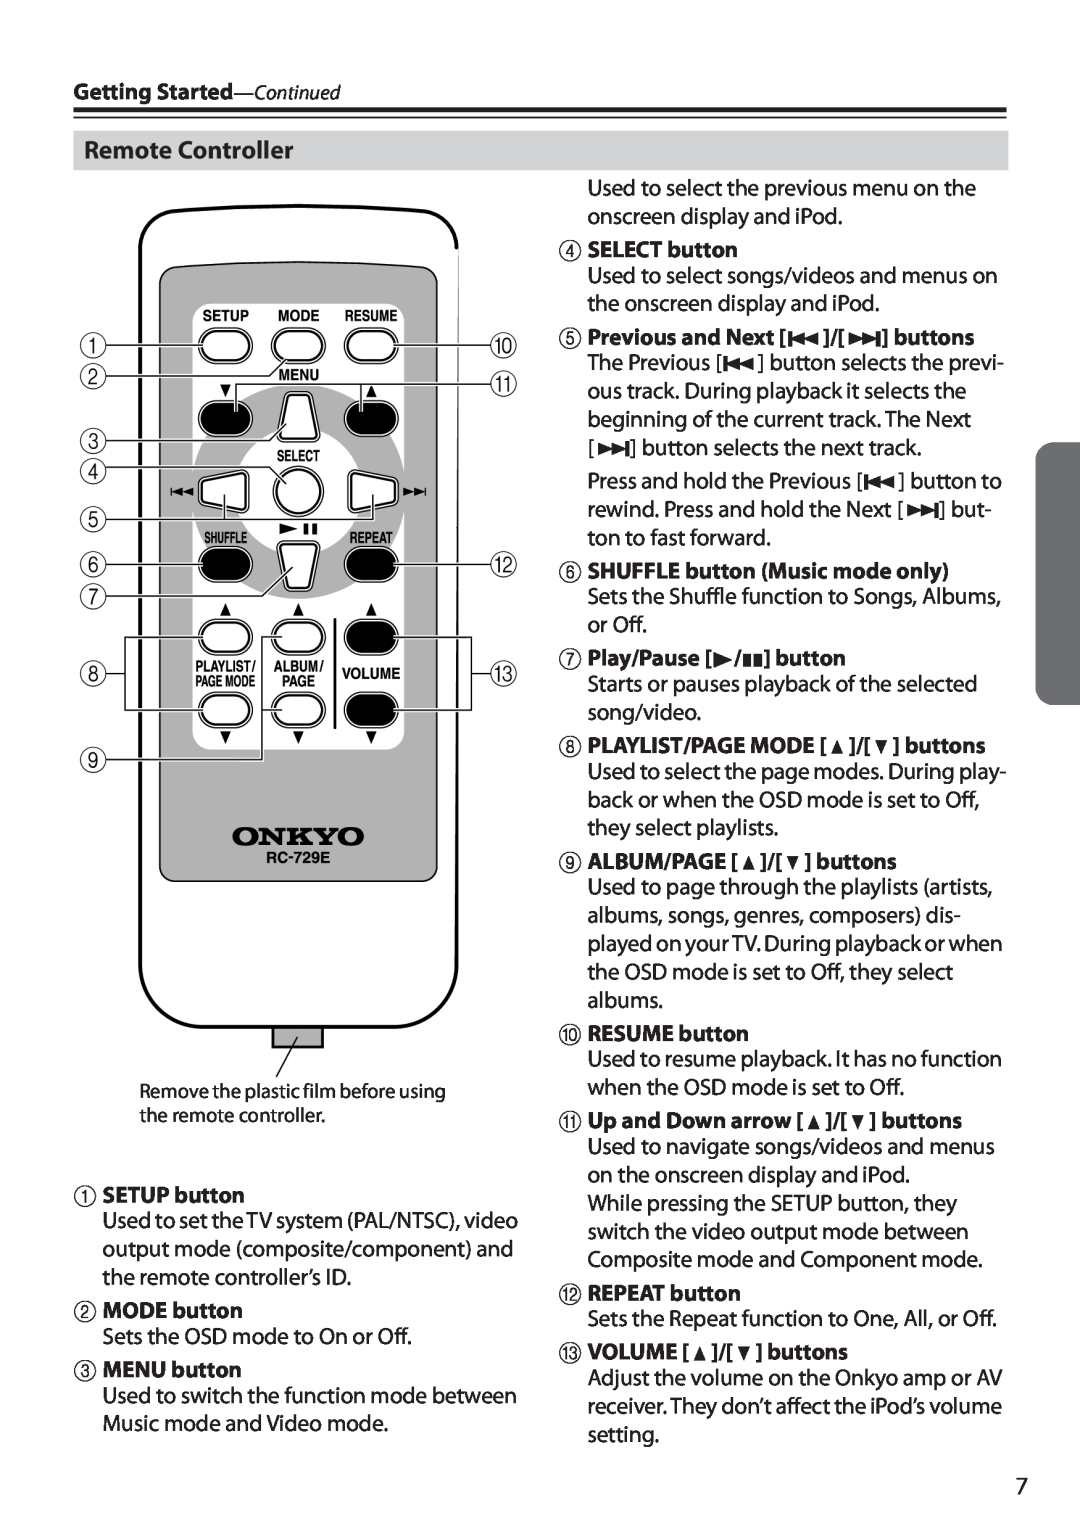 Onkyo 29344880A Remote Controller, A SETUP button, B MODE button, C MENU button, D SELECT button, G Play/Pause / button 